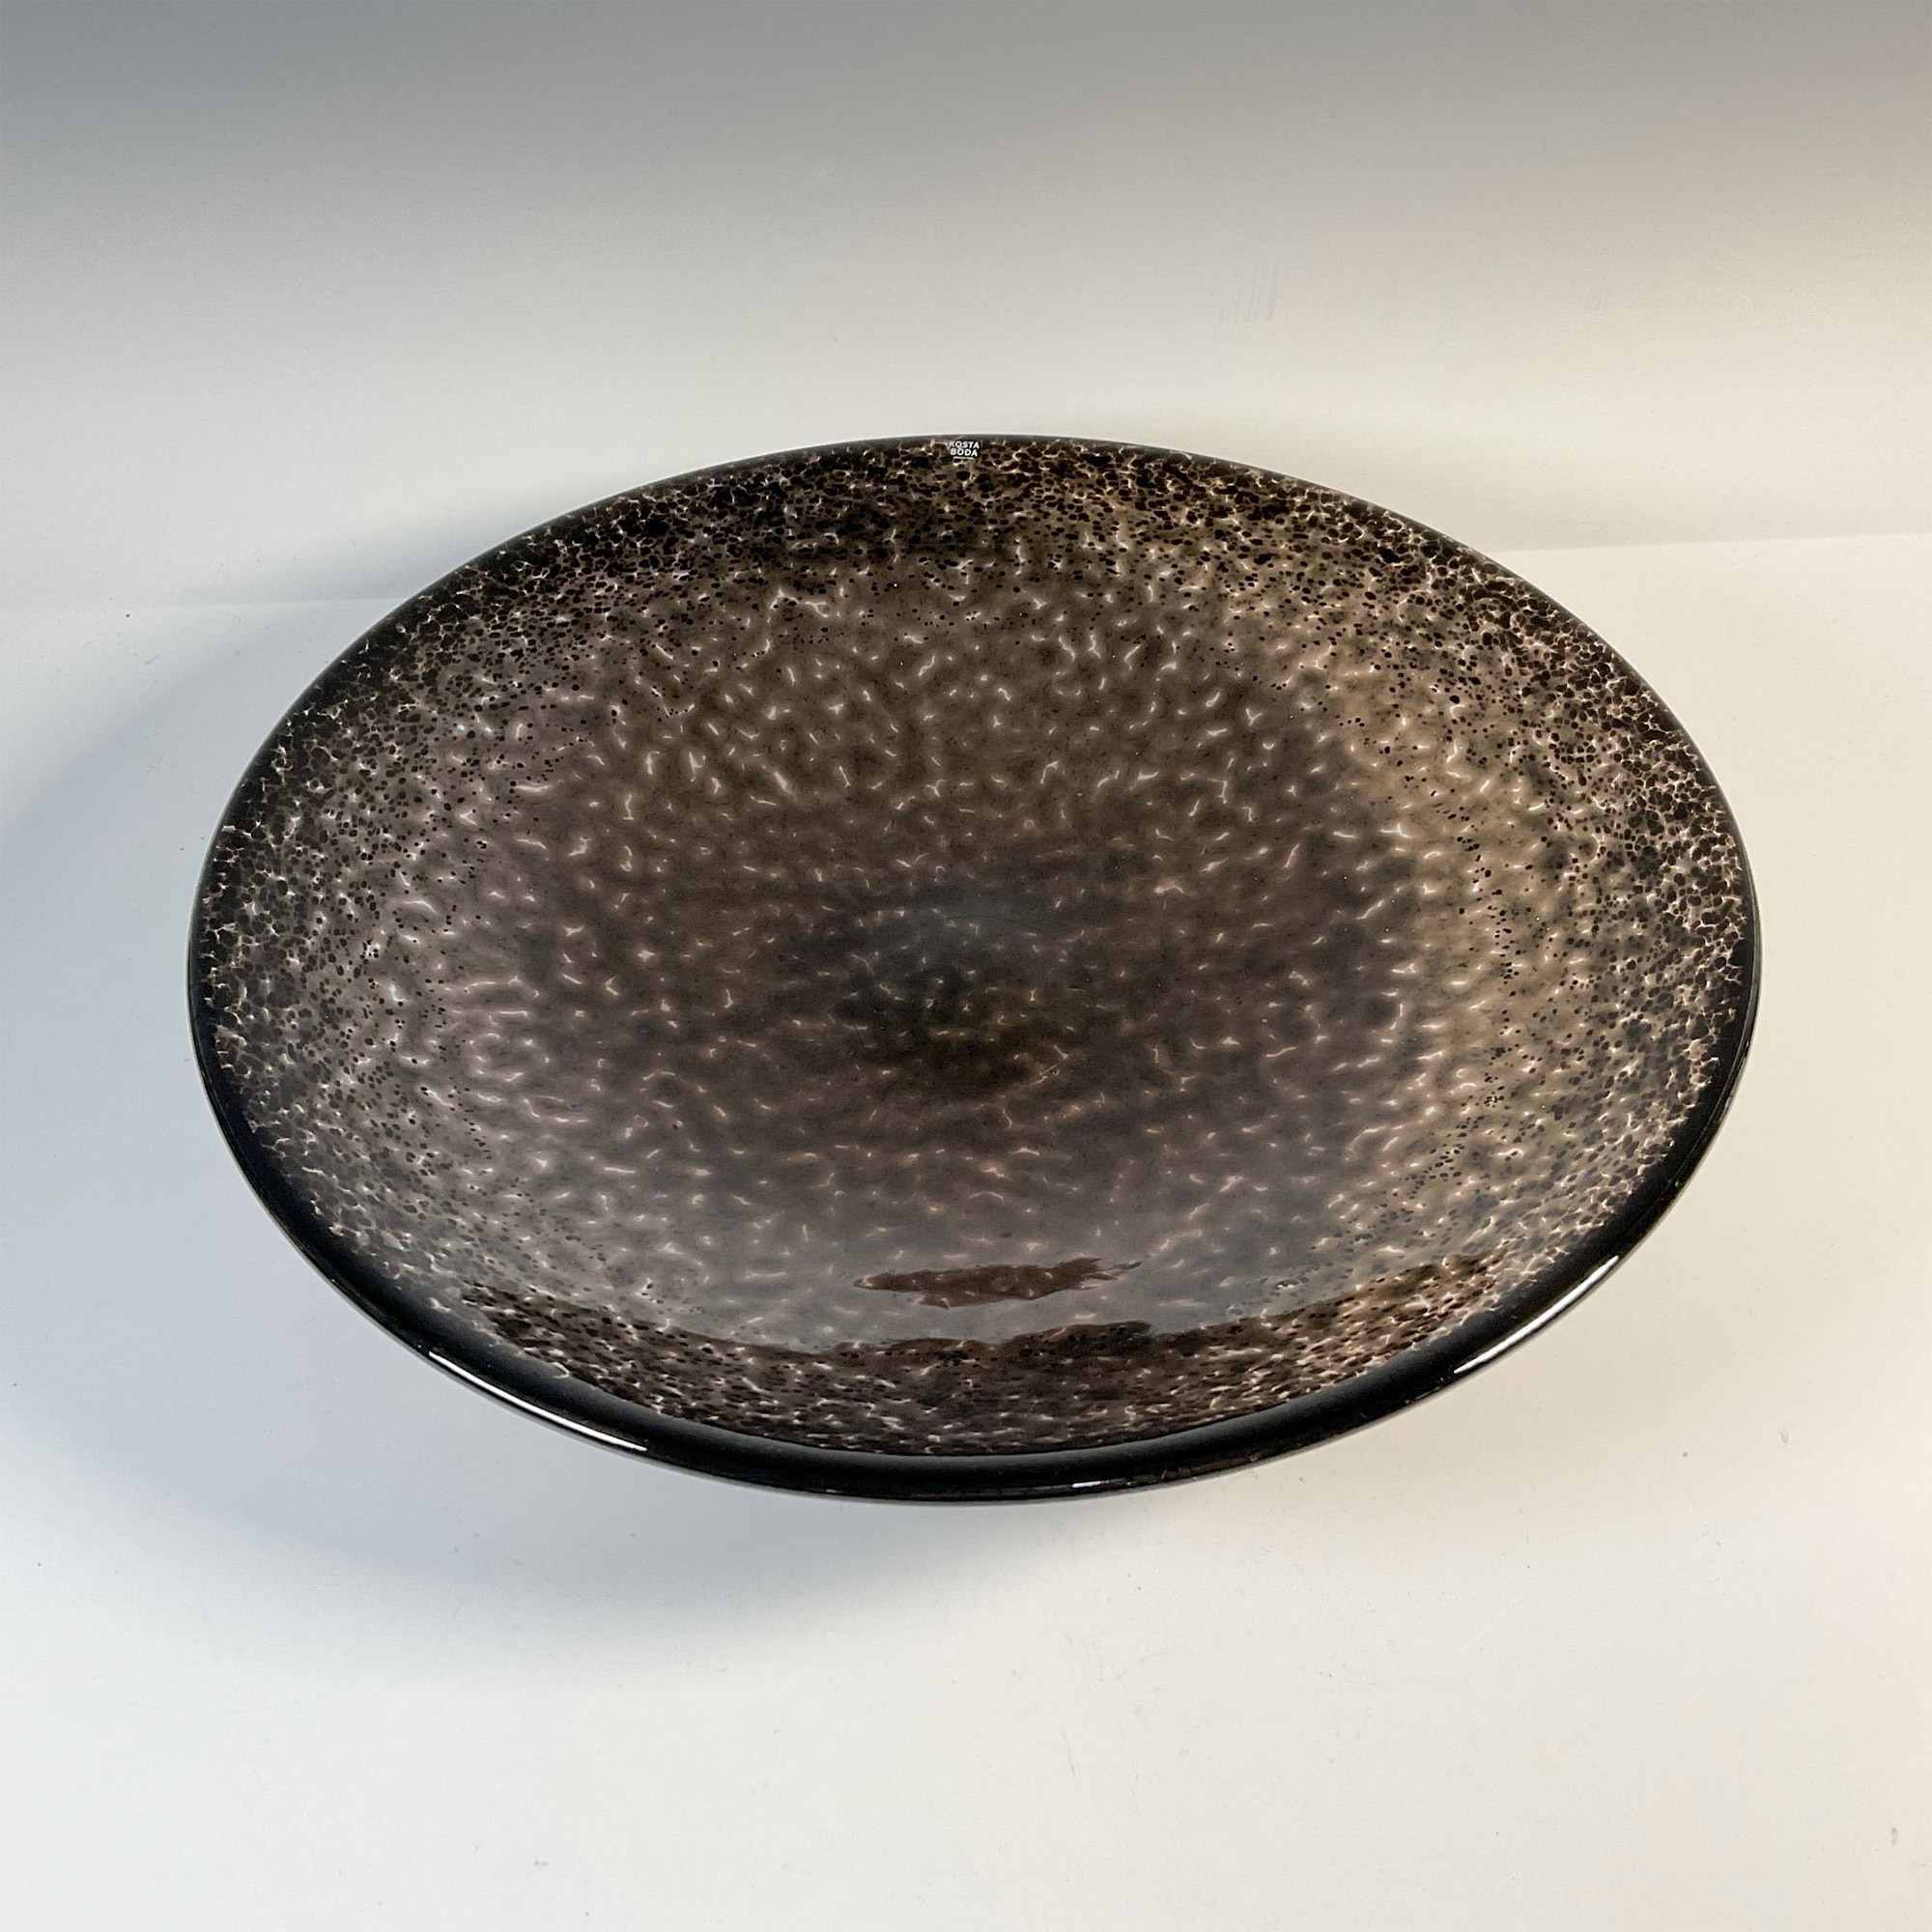 Kosta Boda Art Glass Centerpiece Bowl - Image 2 of 3